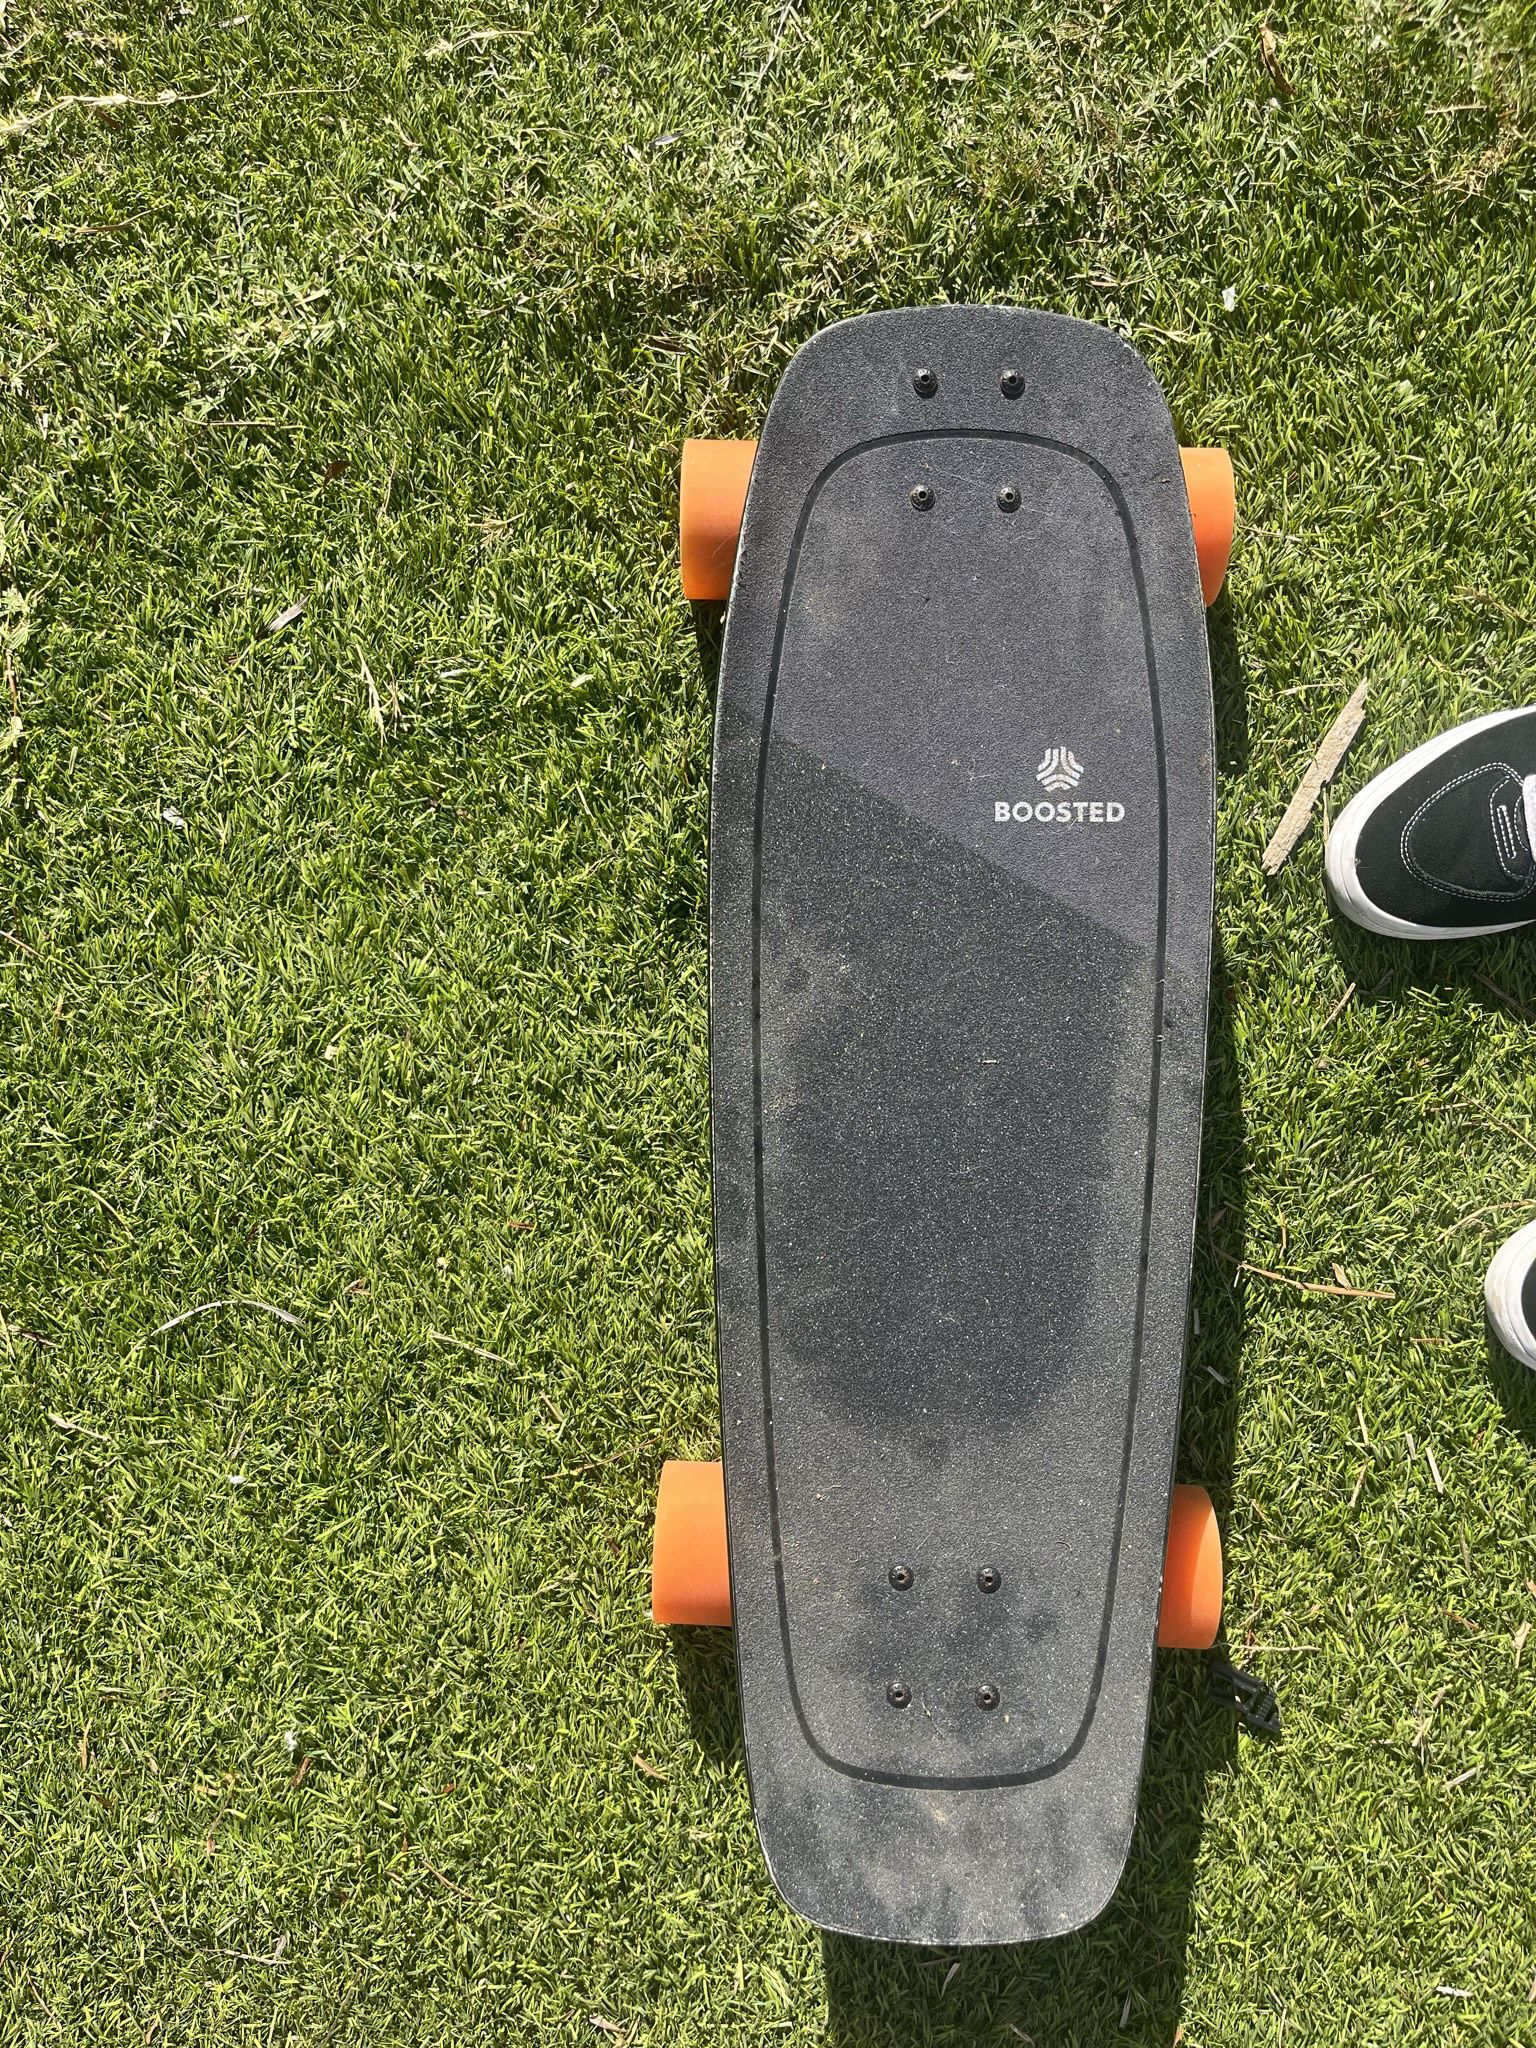 electric skateboard 